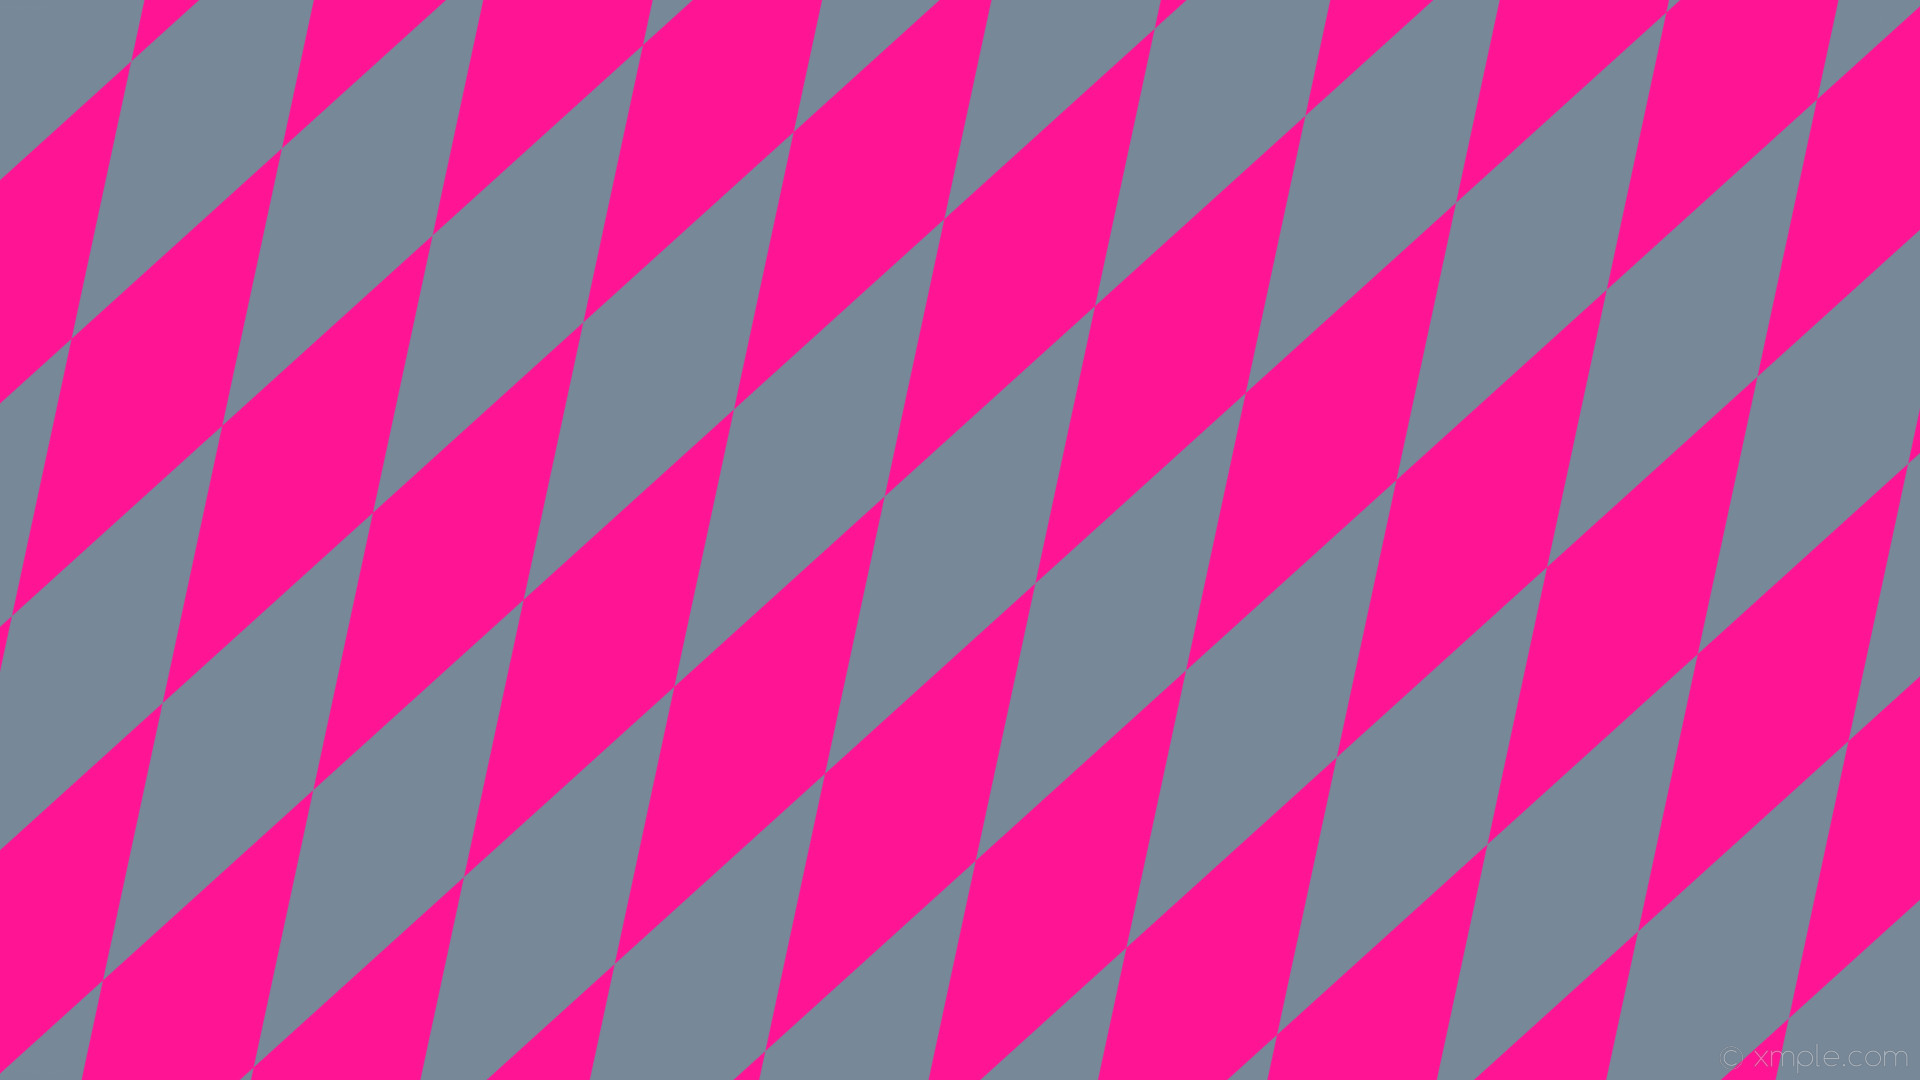 1920x1080 wallpaper pink lozenge diamond grey rhombus light slate gray deep pink  #778899 #ff1493 60